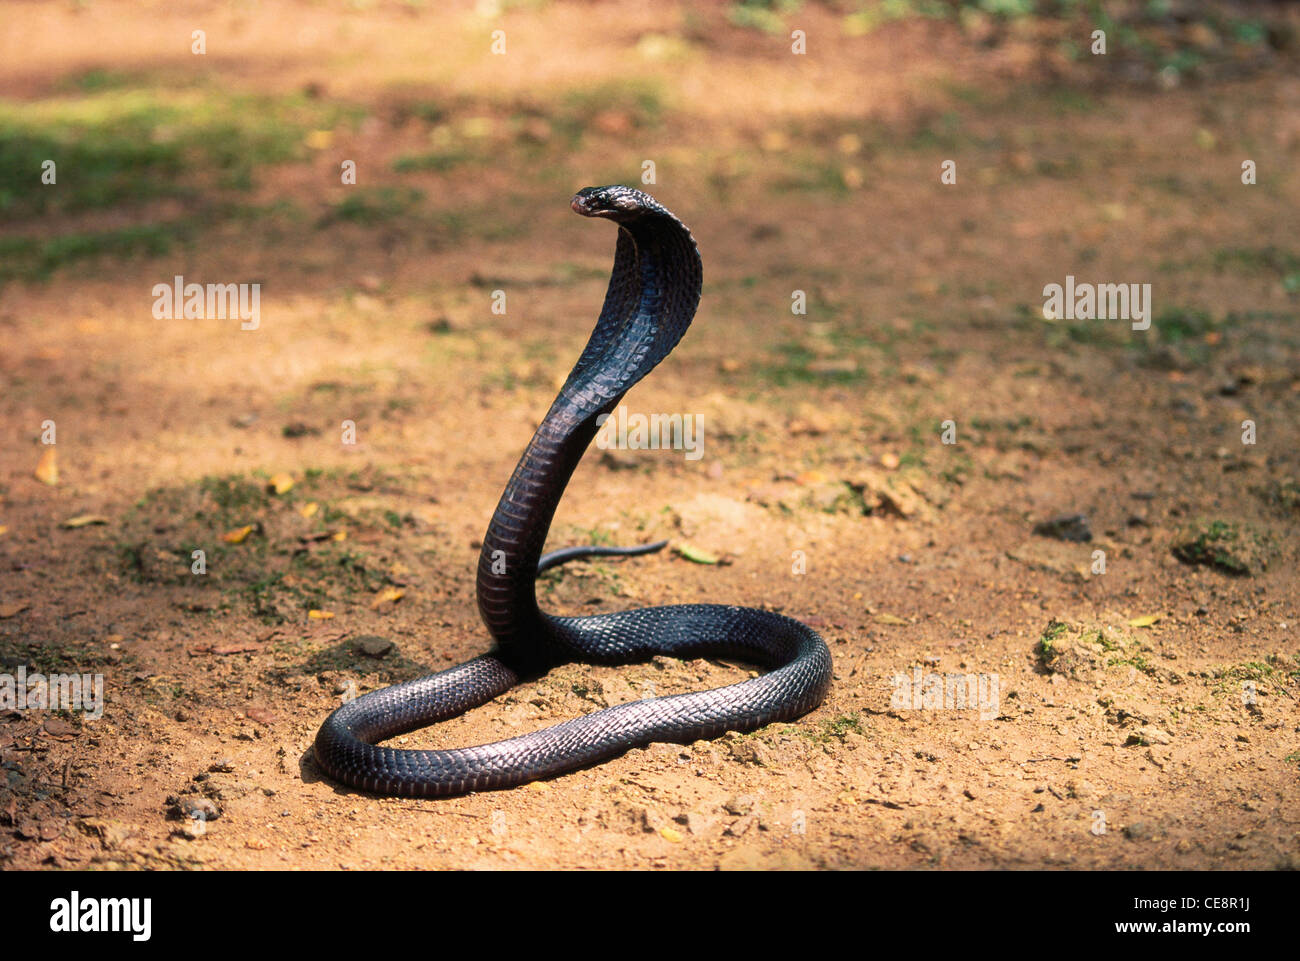 snake black cobra